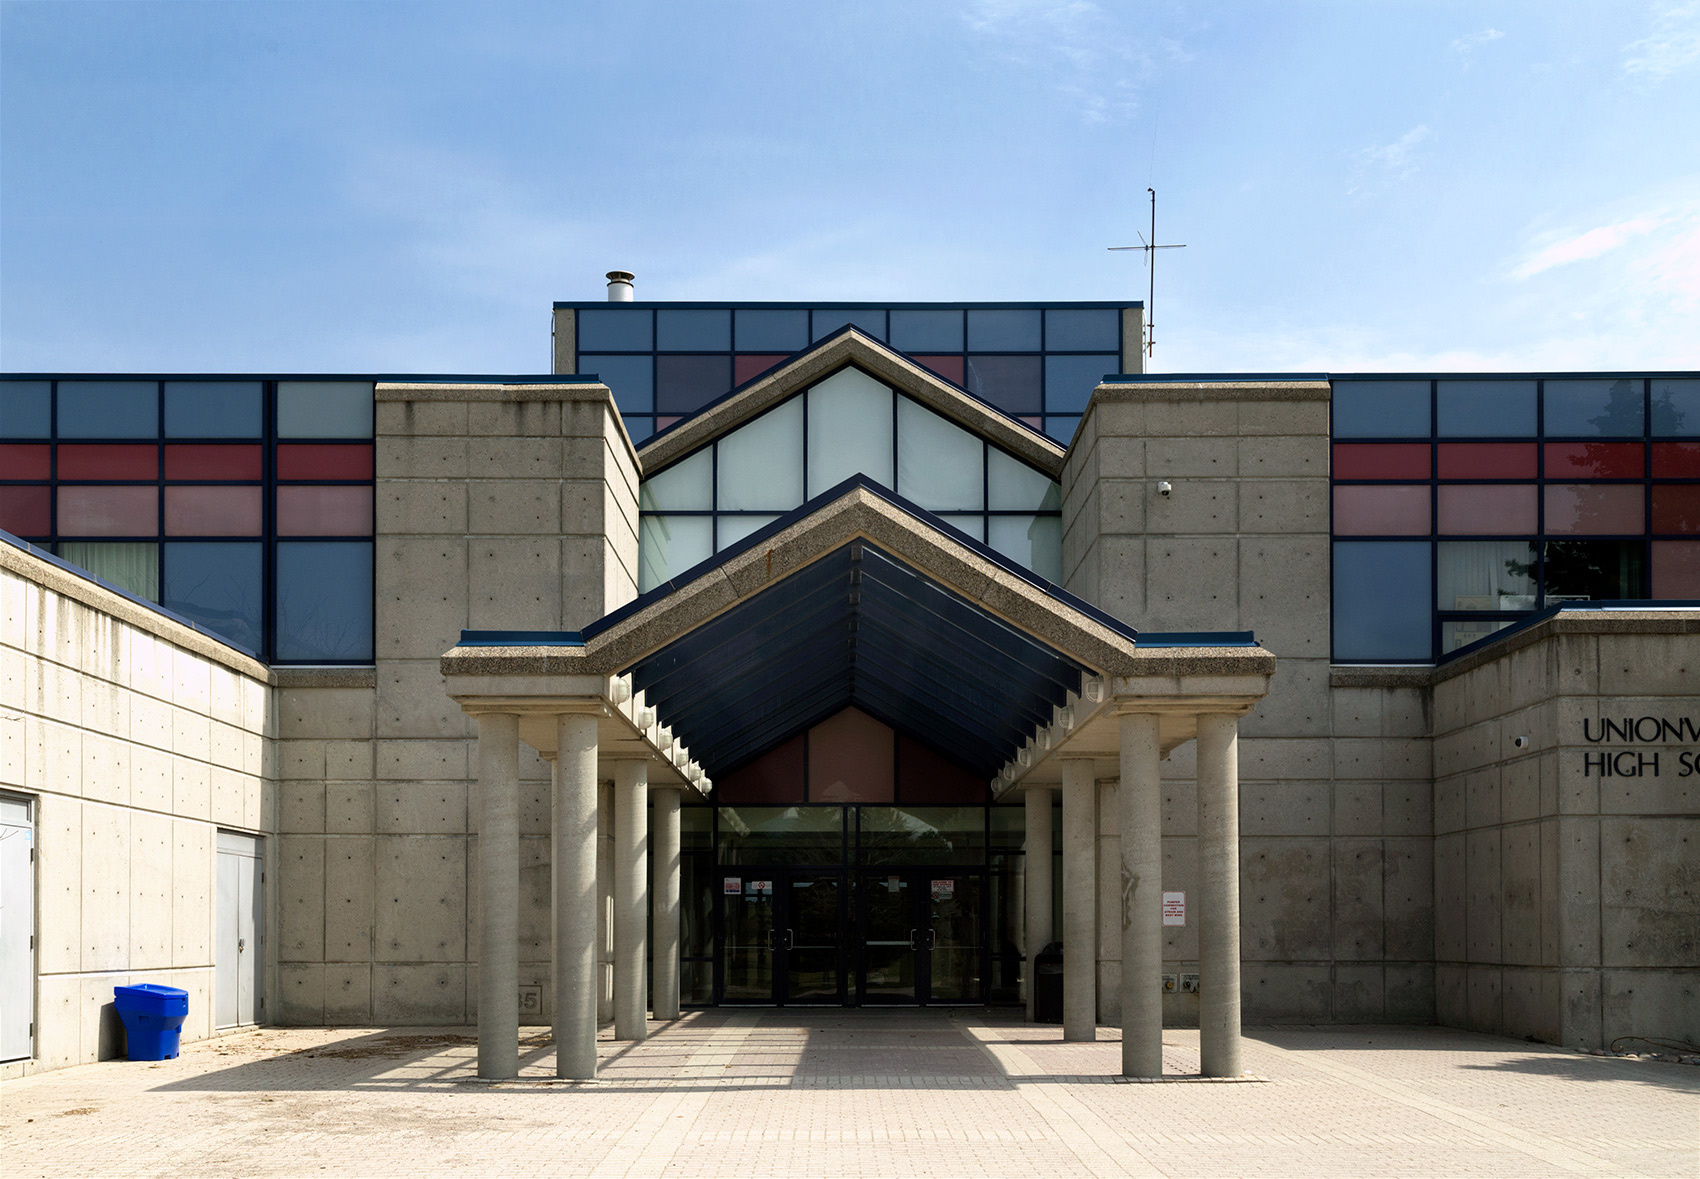 20150327. The concrete and coloured glass Unionville High School